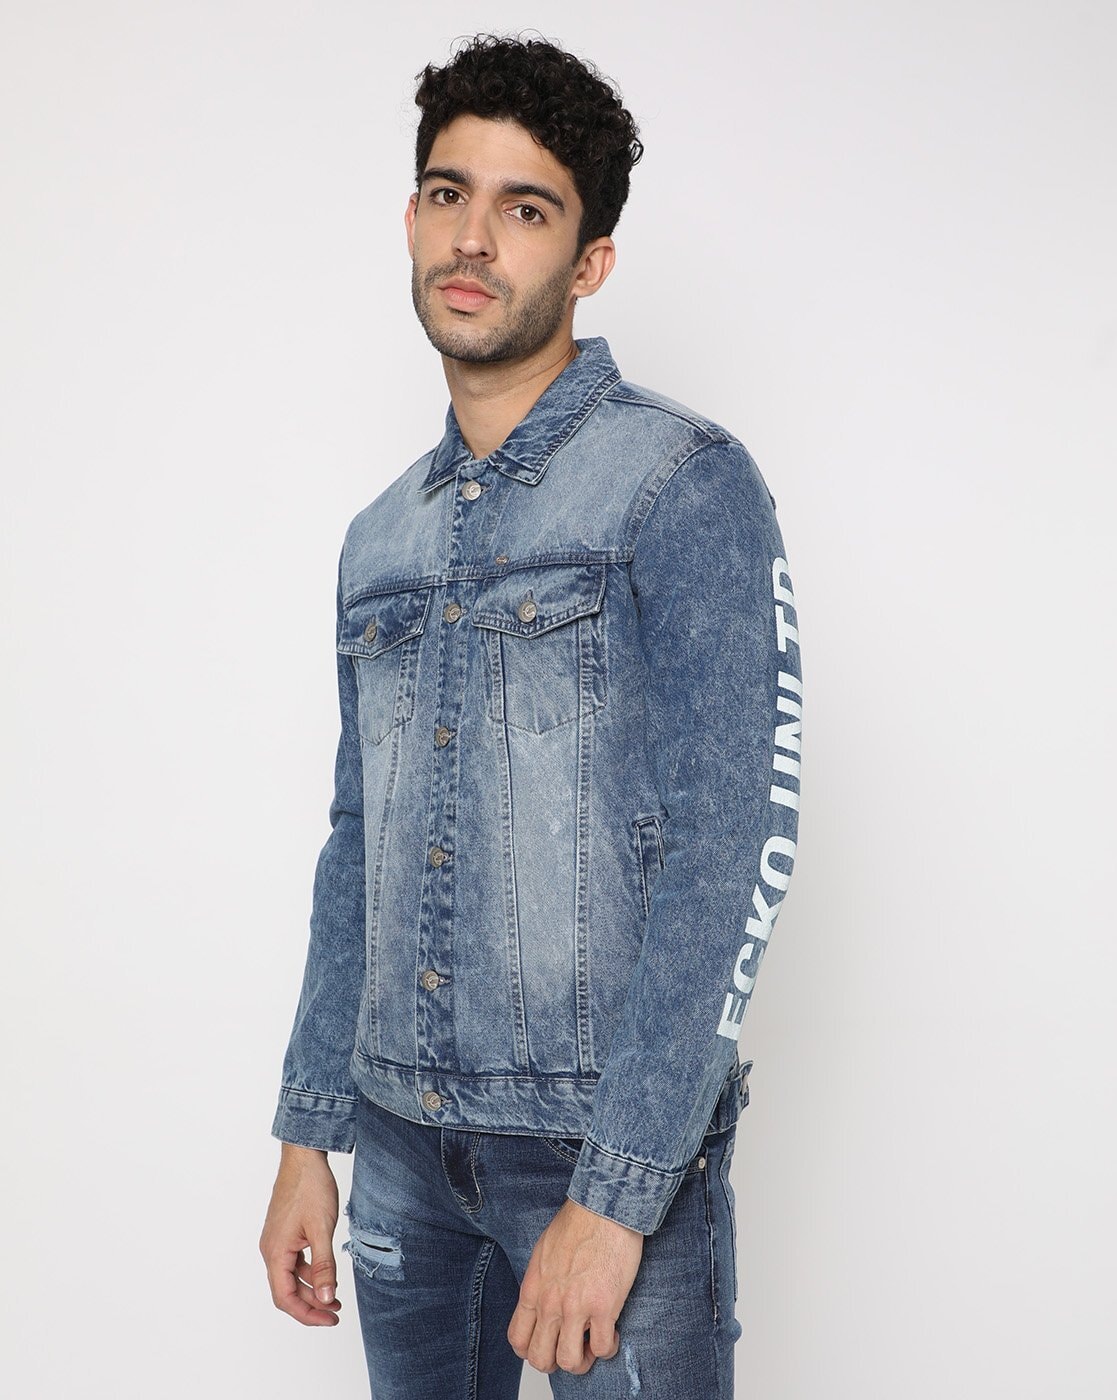 Ecko Unltd Burke Jeans Jacket denimblue - Gangstagroup.com - Online Hip Hop  Fashion Store